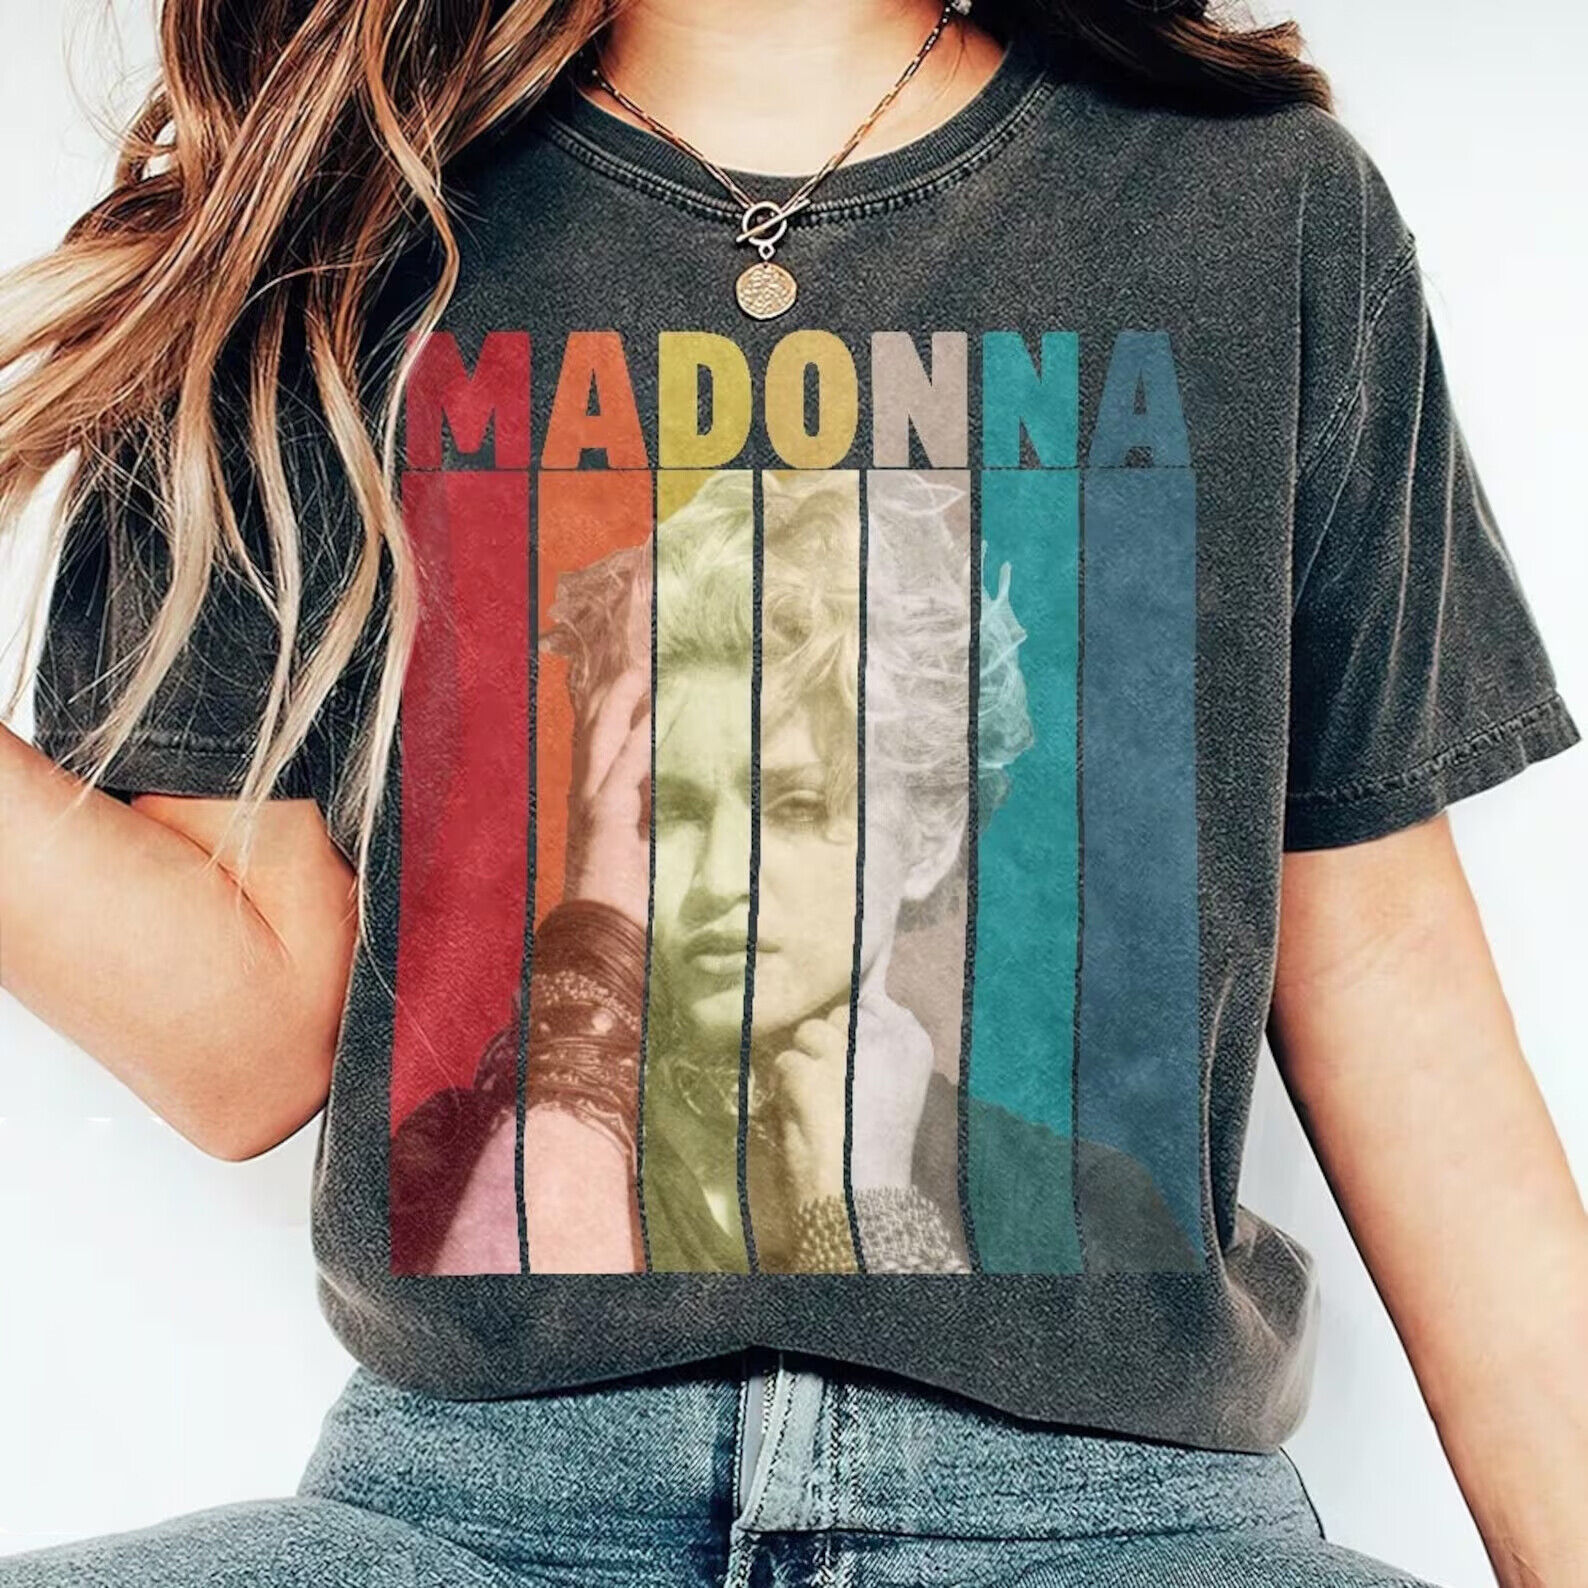 Madonna Queen of Pop Retro Vintage shirt for fans, Music T-Shirt Gift Men Women